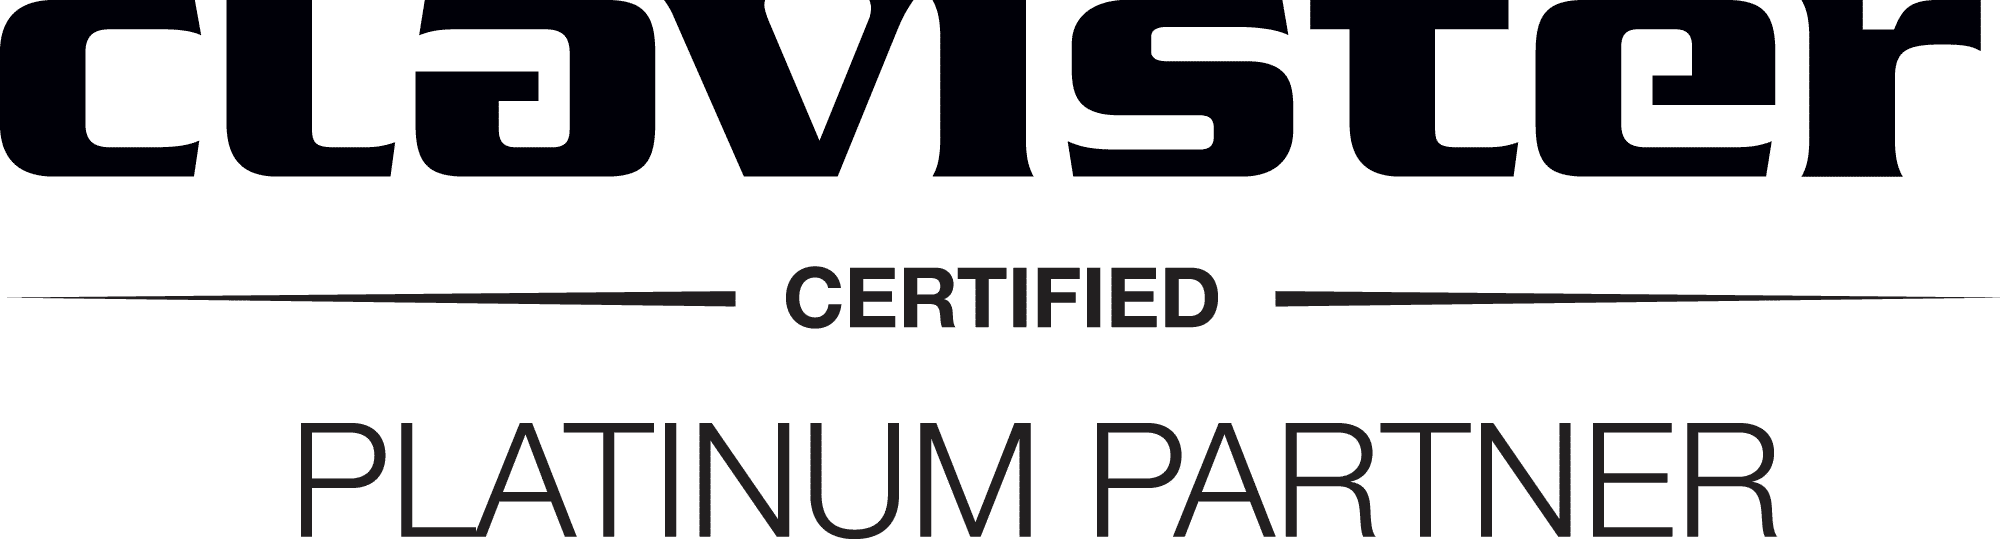 clavister certified platinum partner logo